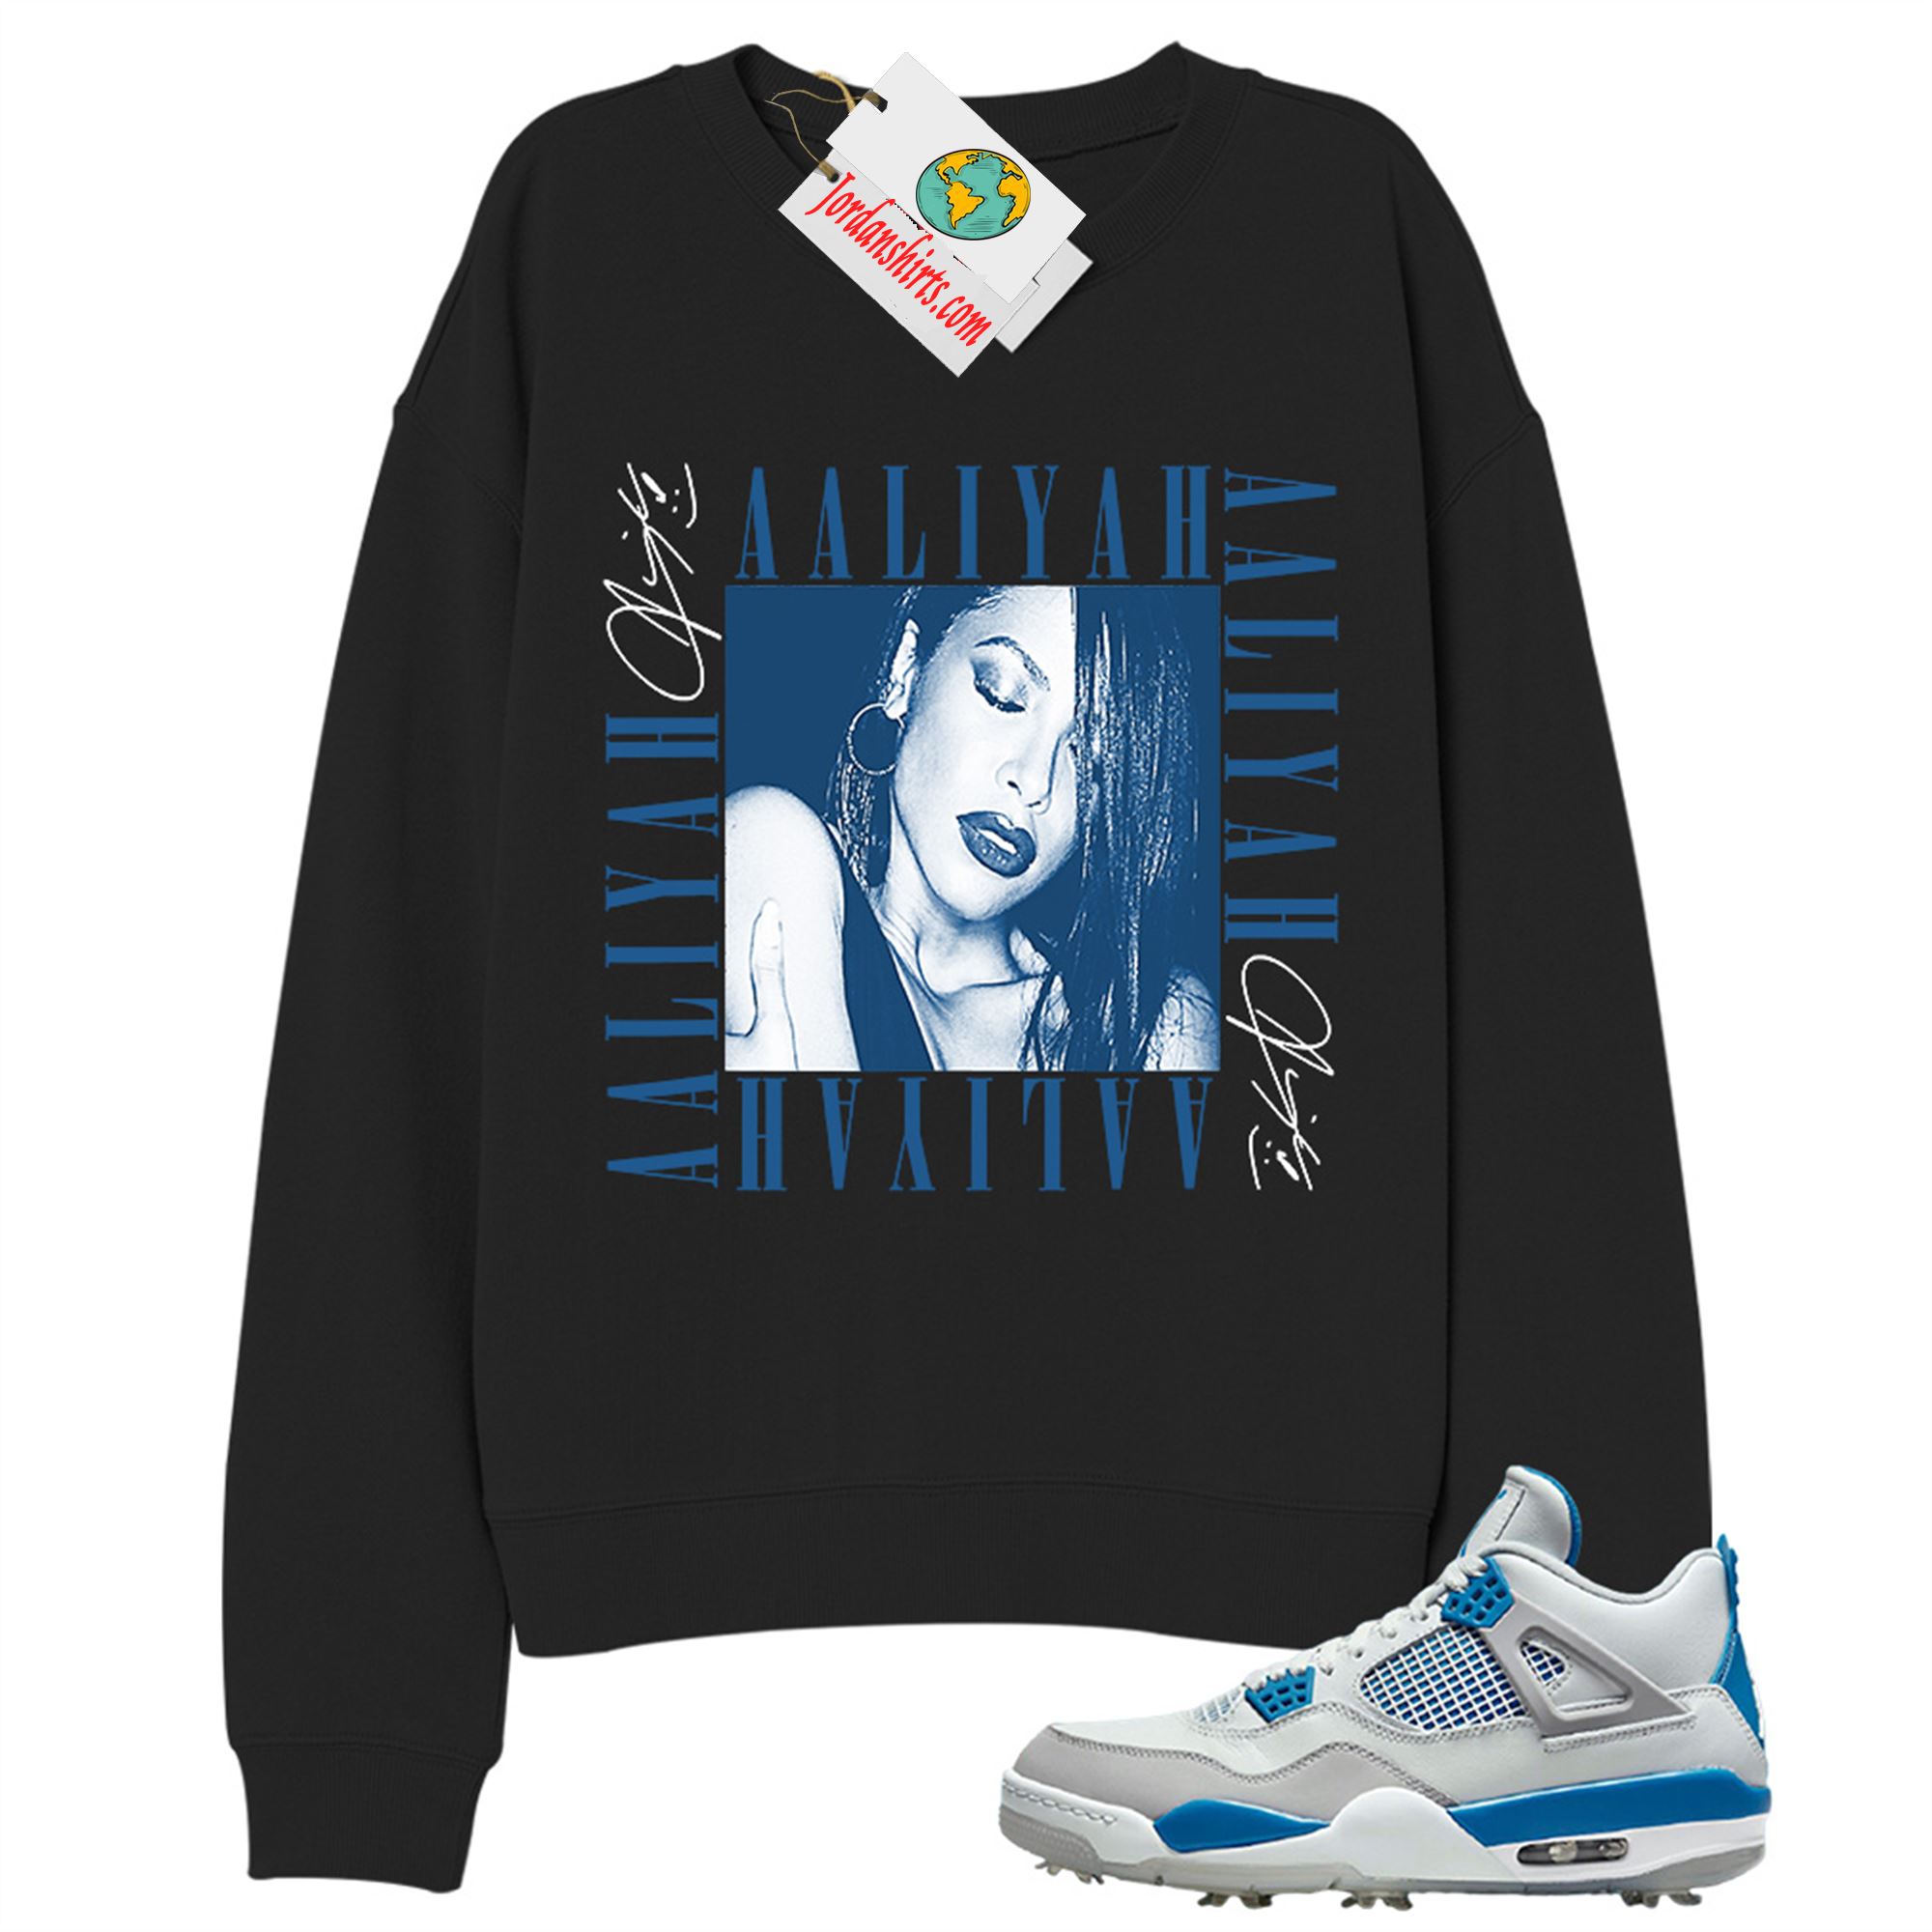 Jordan 4 Sweatshirt, Aaliyah Box Black Sweatshirt Air Jordan 4 Golf Military Blue 4s Size Up To 5xl